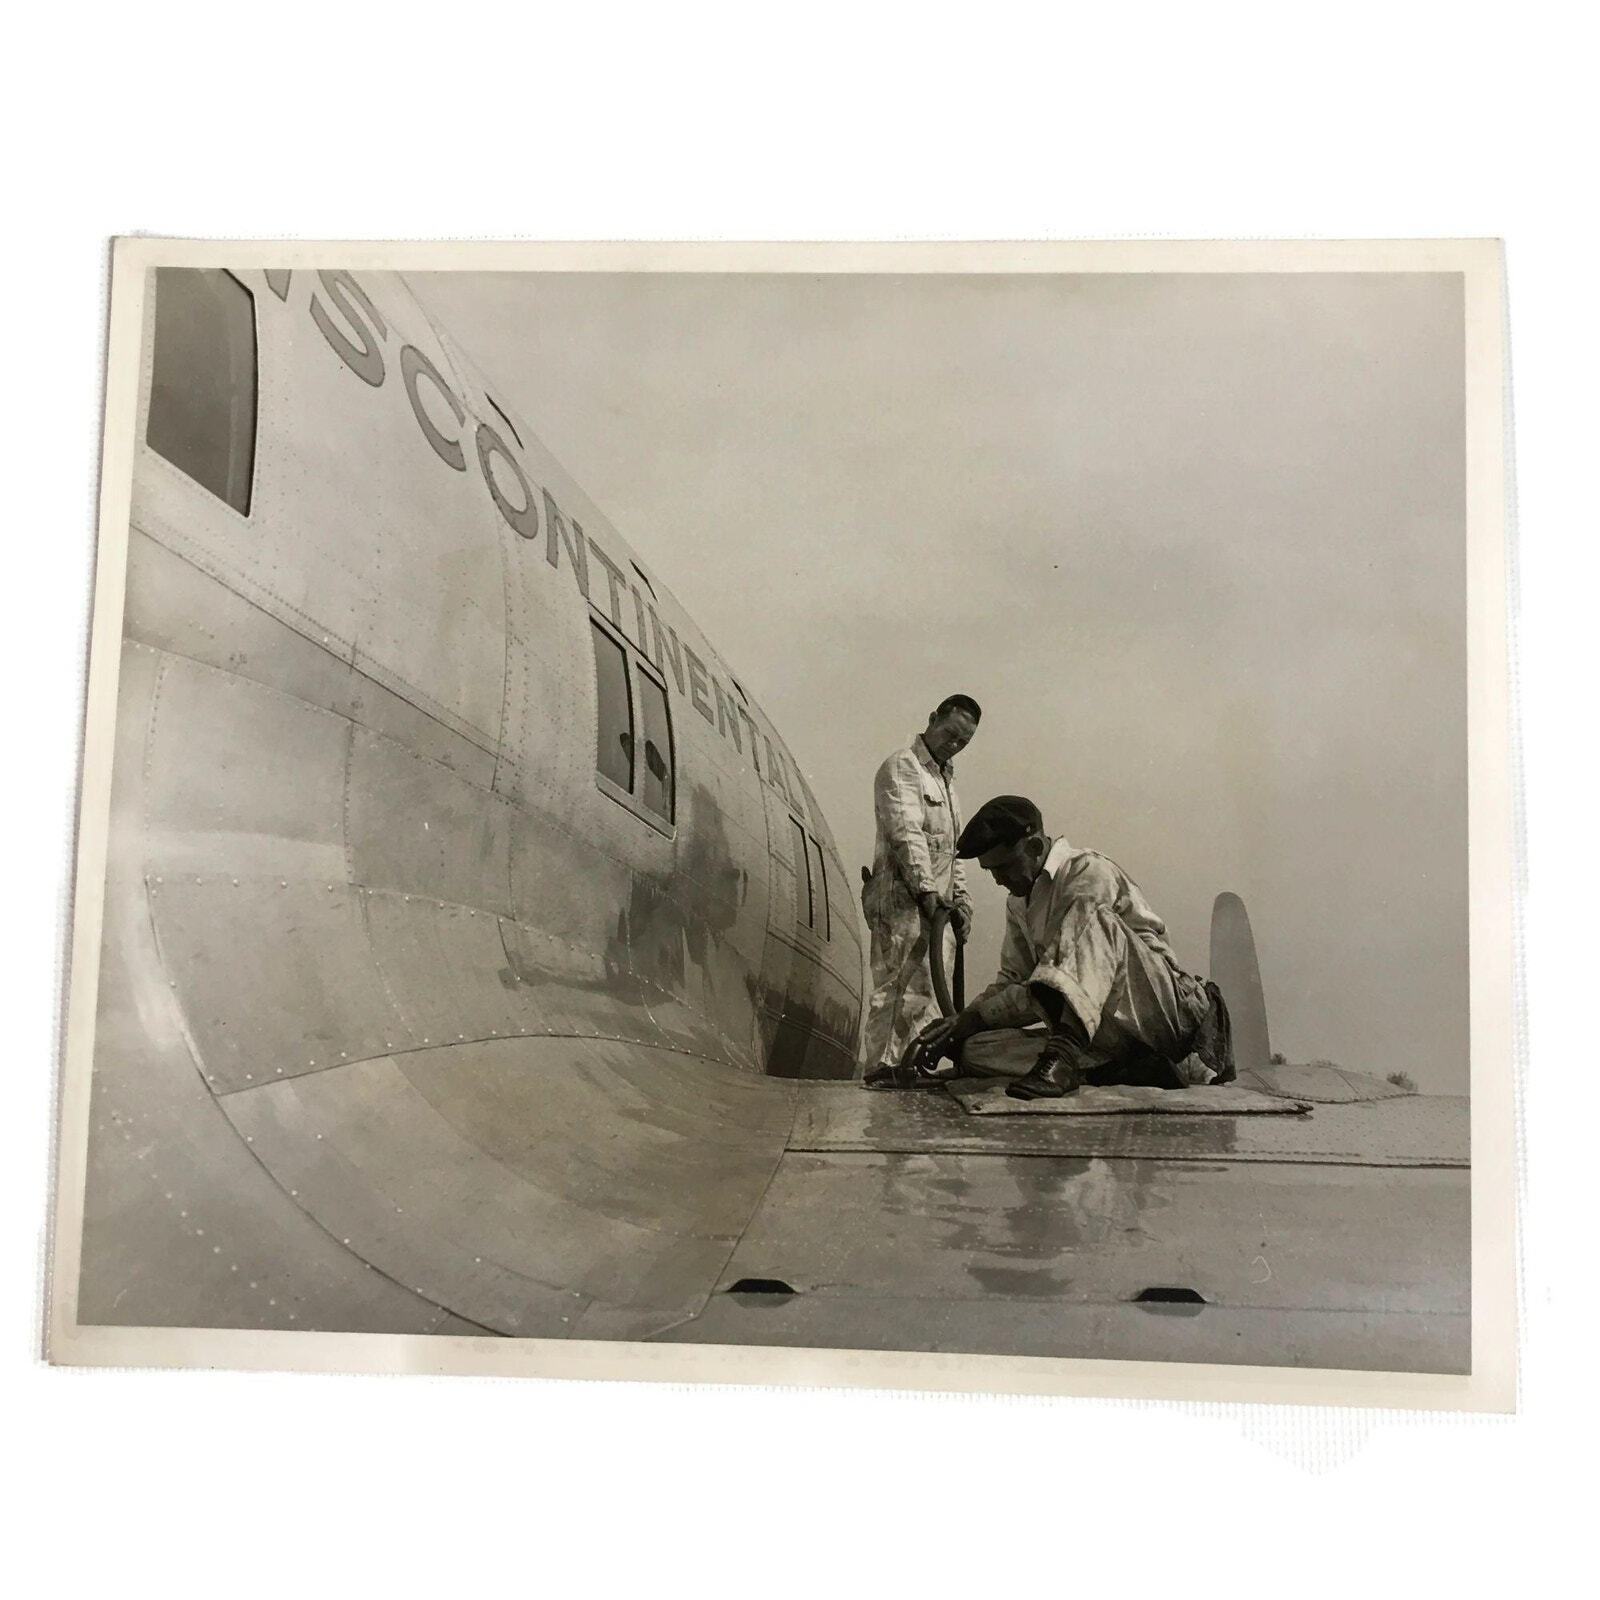 Photo TWA Press 8x10 B&W cleaning or doing maintenance on TRANSCONTINENTA plane